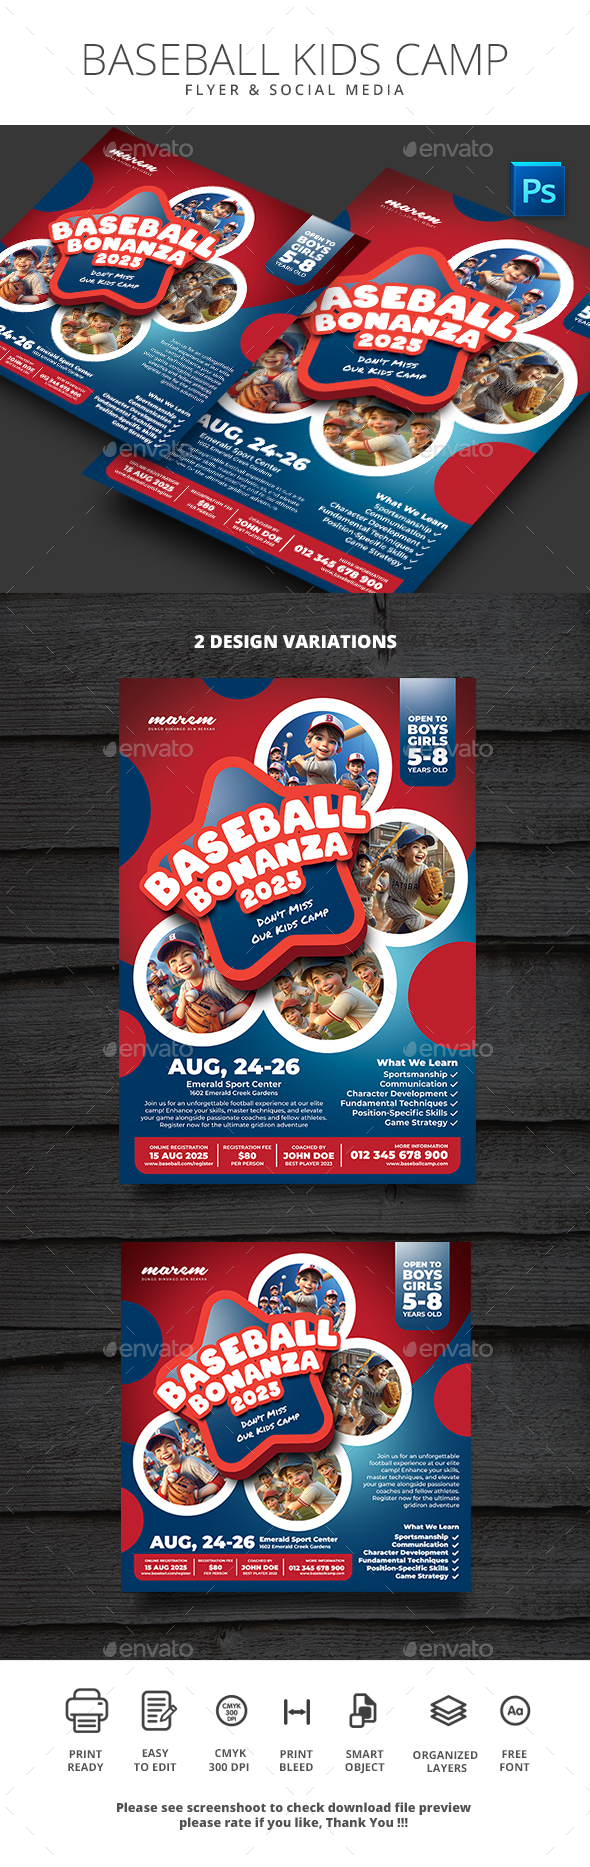 Kids Baseball Camp Flyer and Social Media